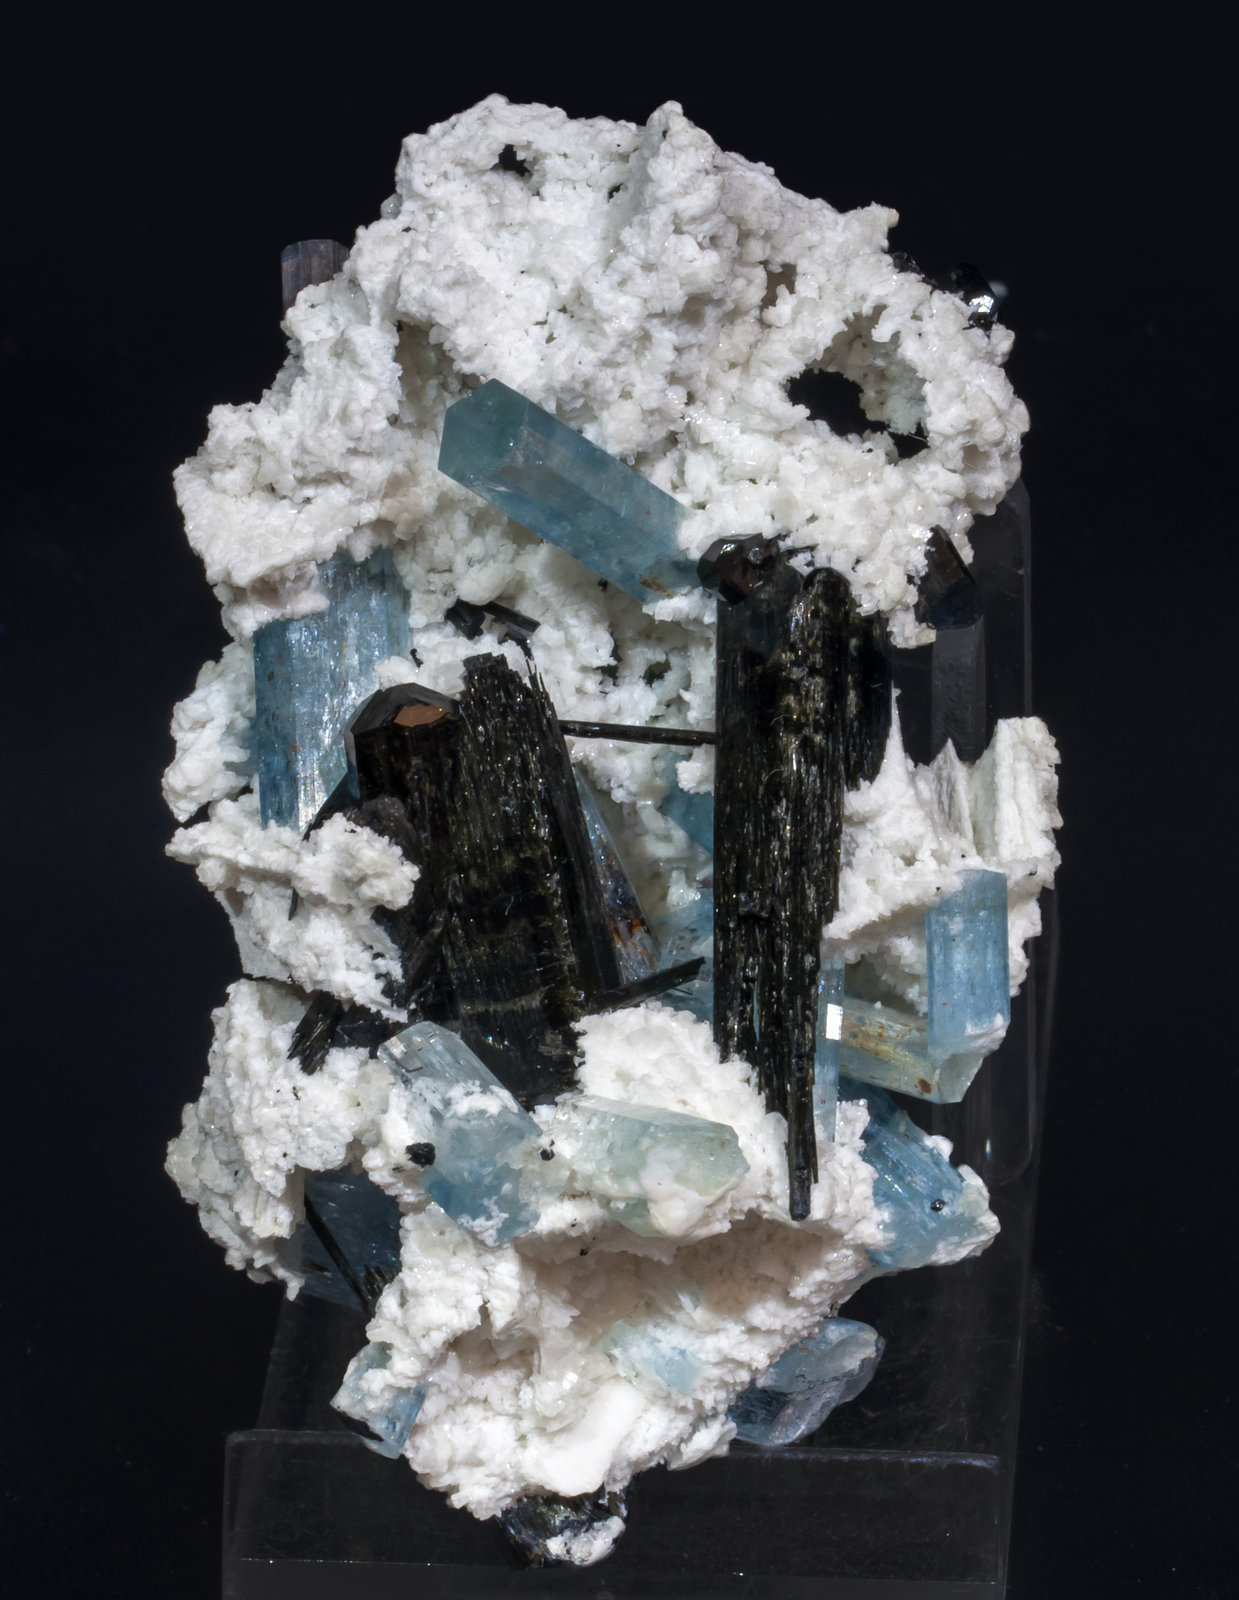 specimens/s_imagesAI5/Beryl_aquamarine-MV91AI5f.jpg